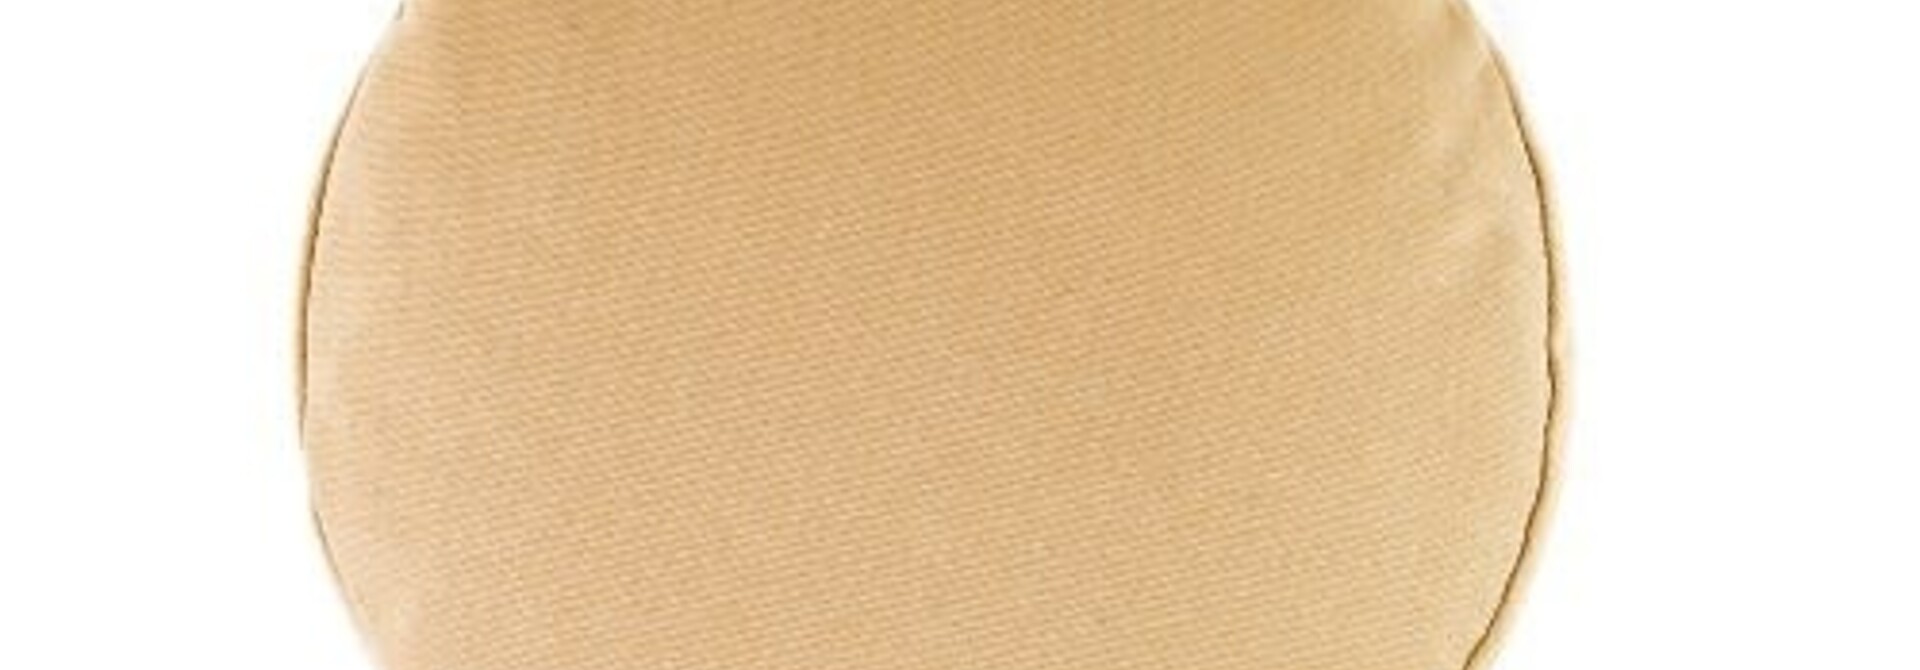 Yogisha Meditationskissen Deluxe 17 cm hoch